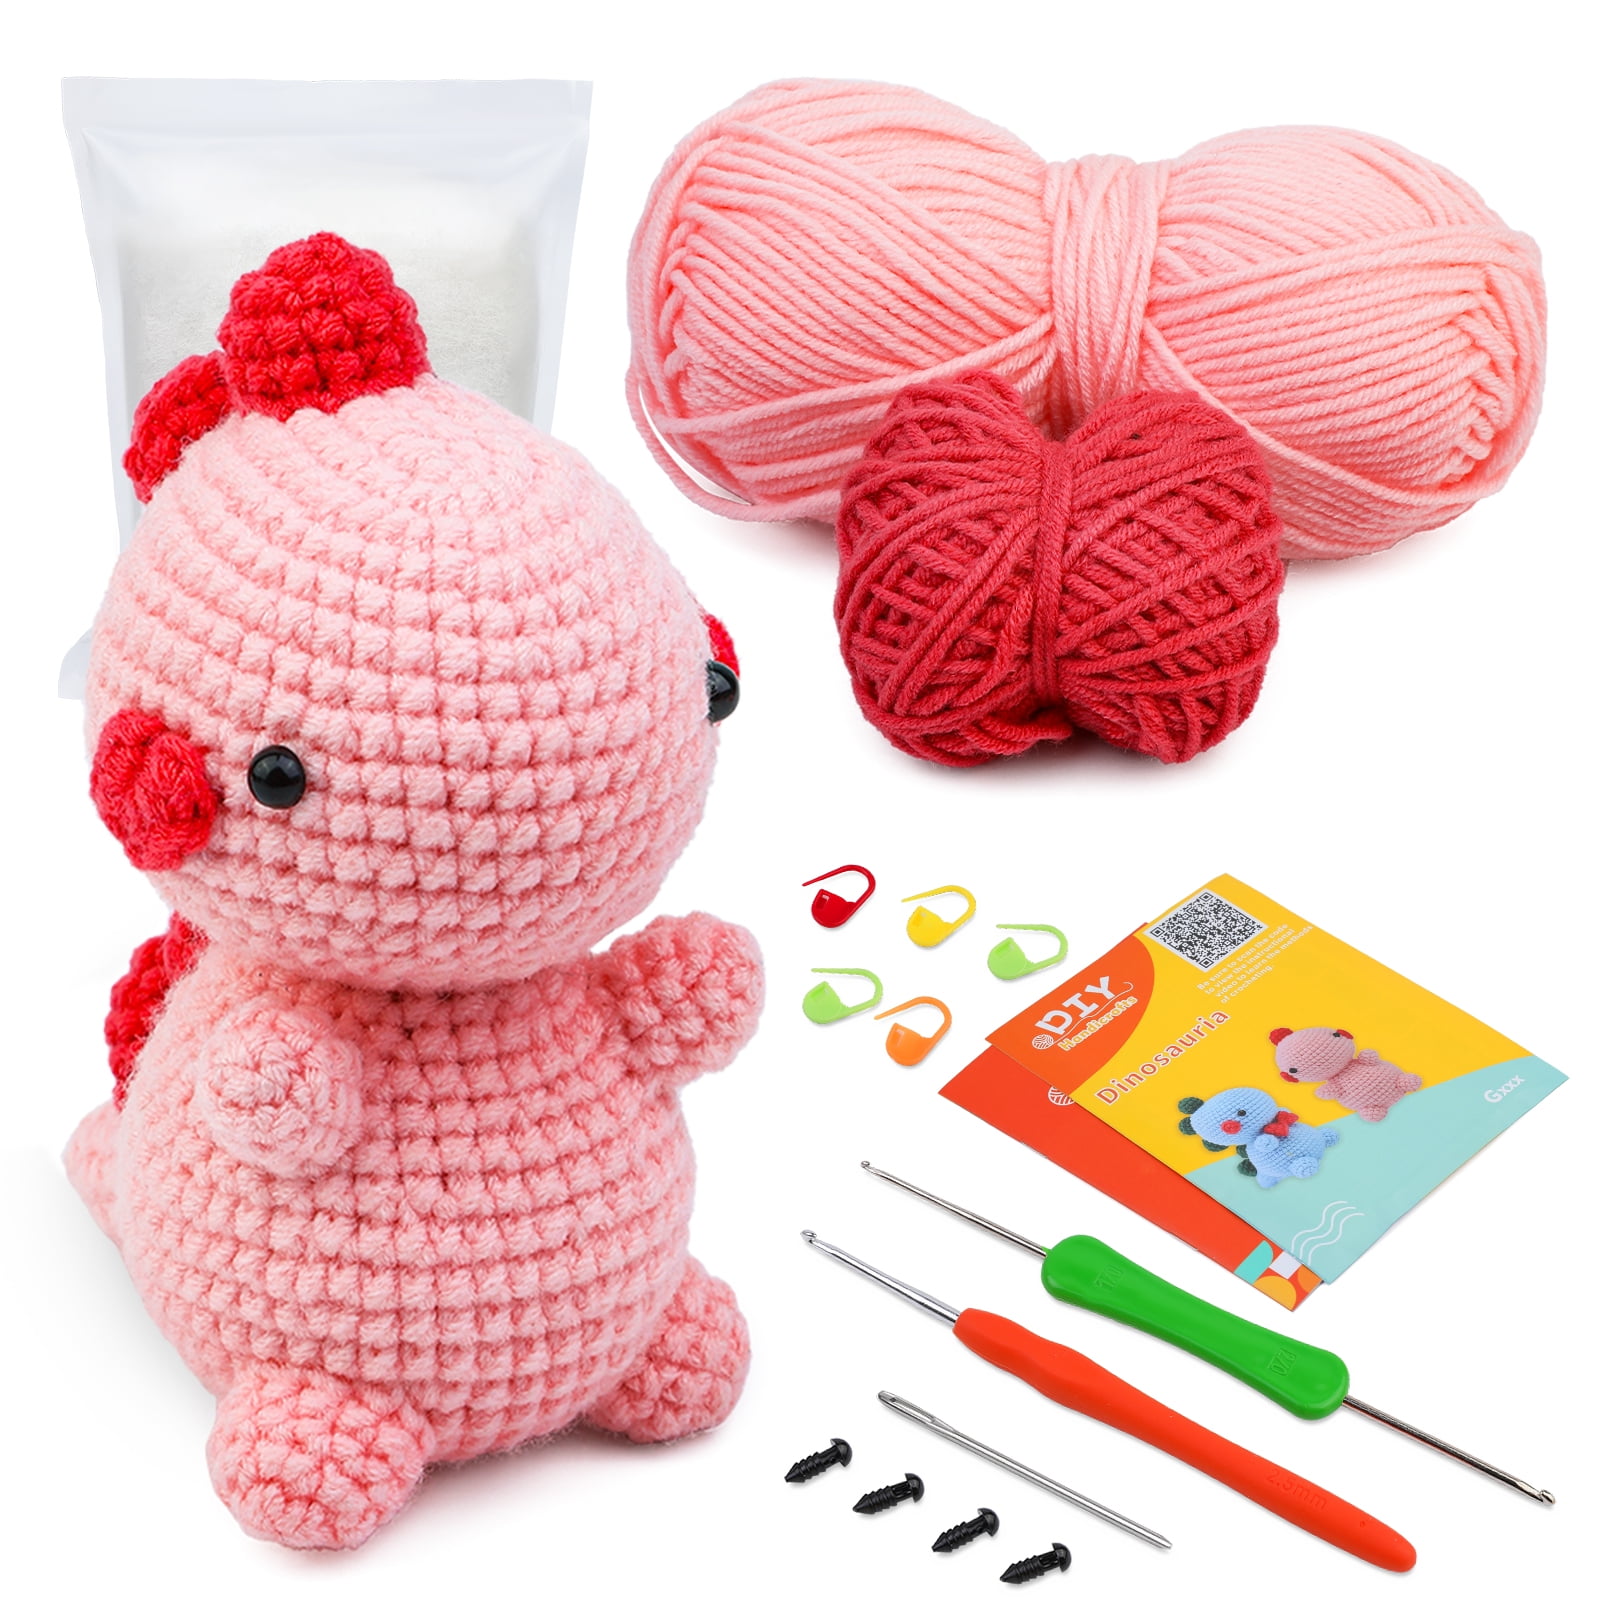 Crochet Kit for Beginners Halloween Pink Wing Mushroom Animals